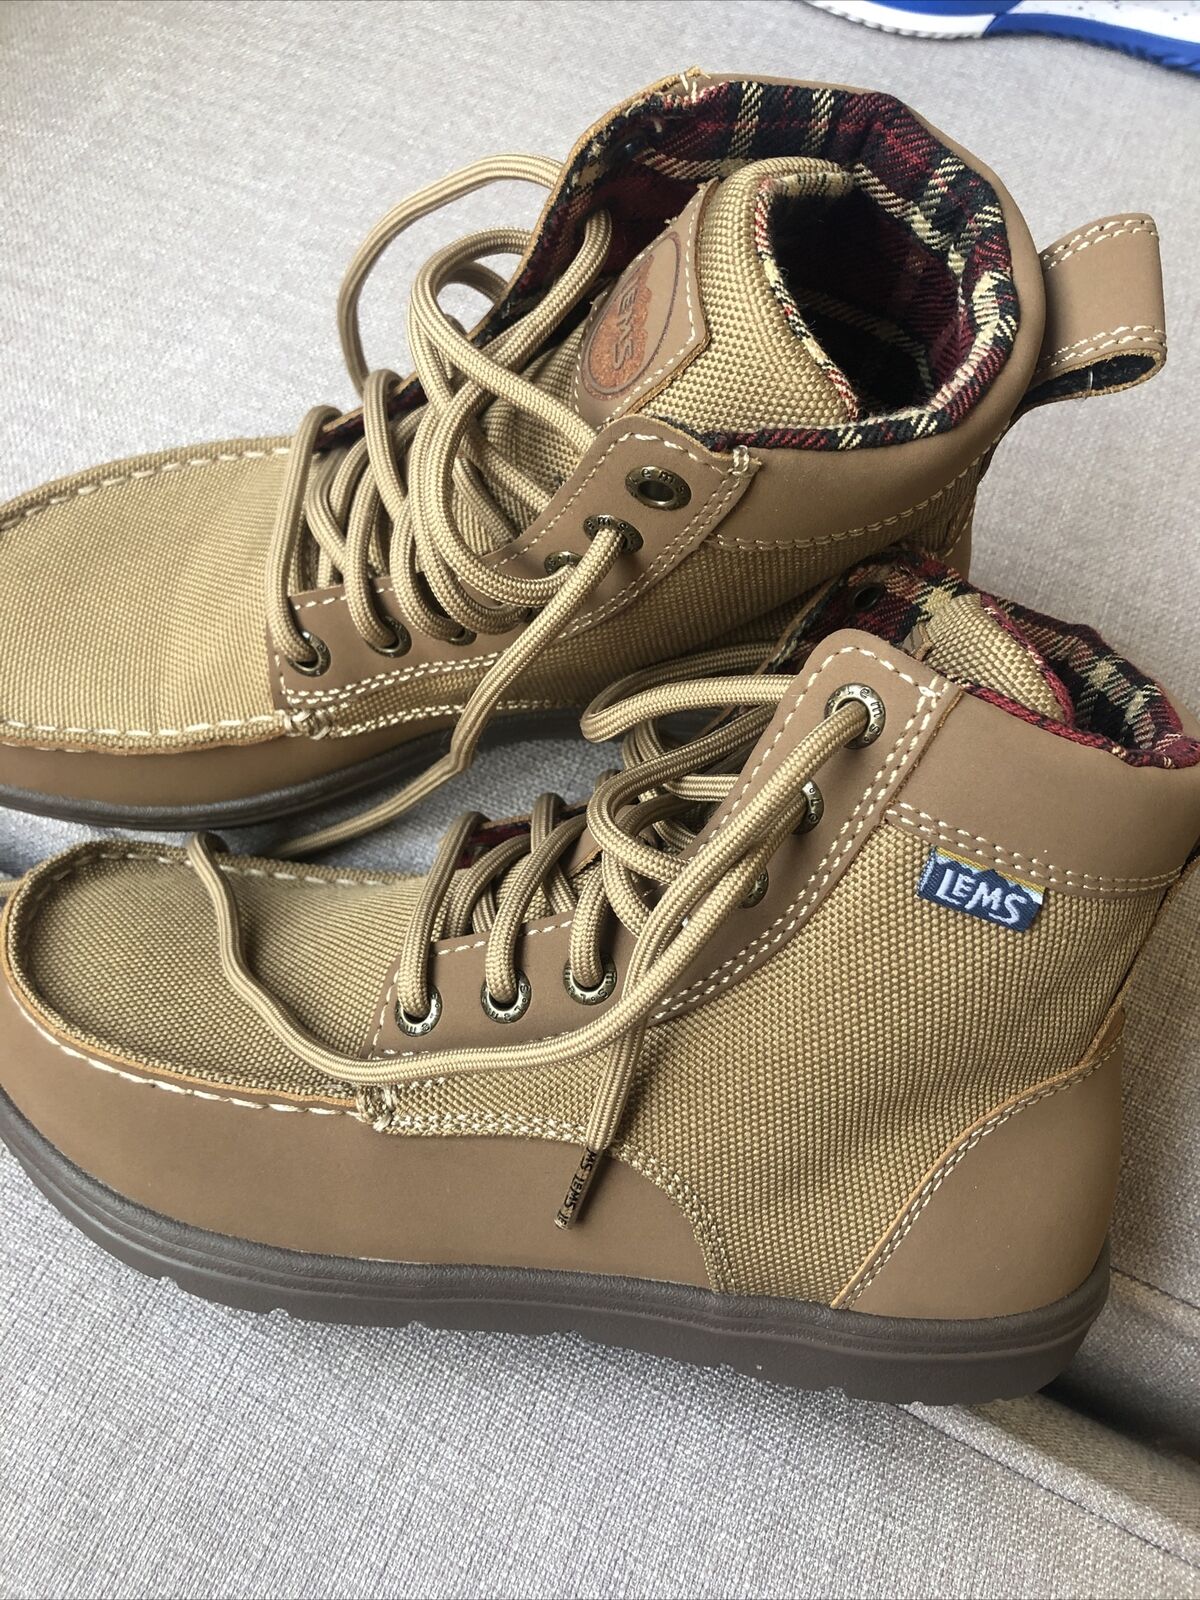 Lems Boulder Boots “Buckeye” Minimal Hiking Zero Drop Shoes Men’s Size 3.5 W5